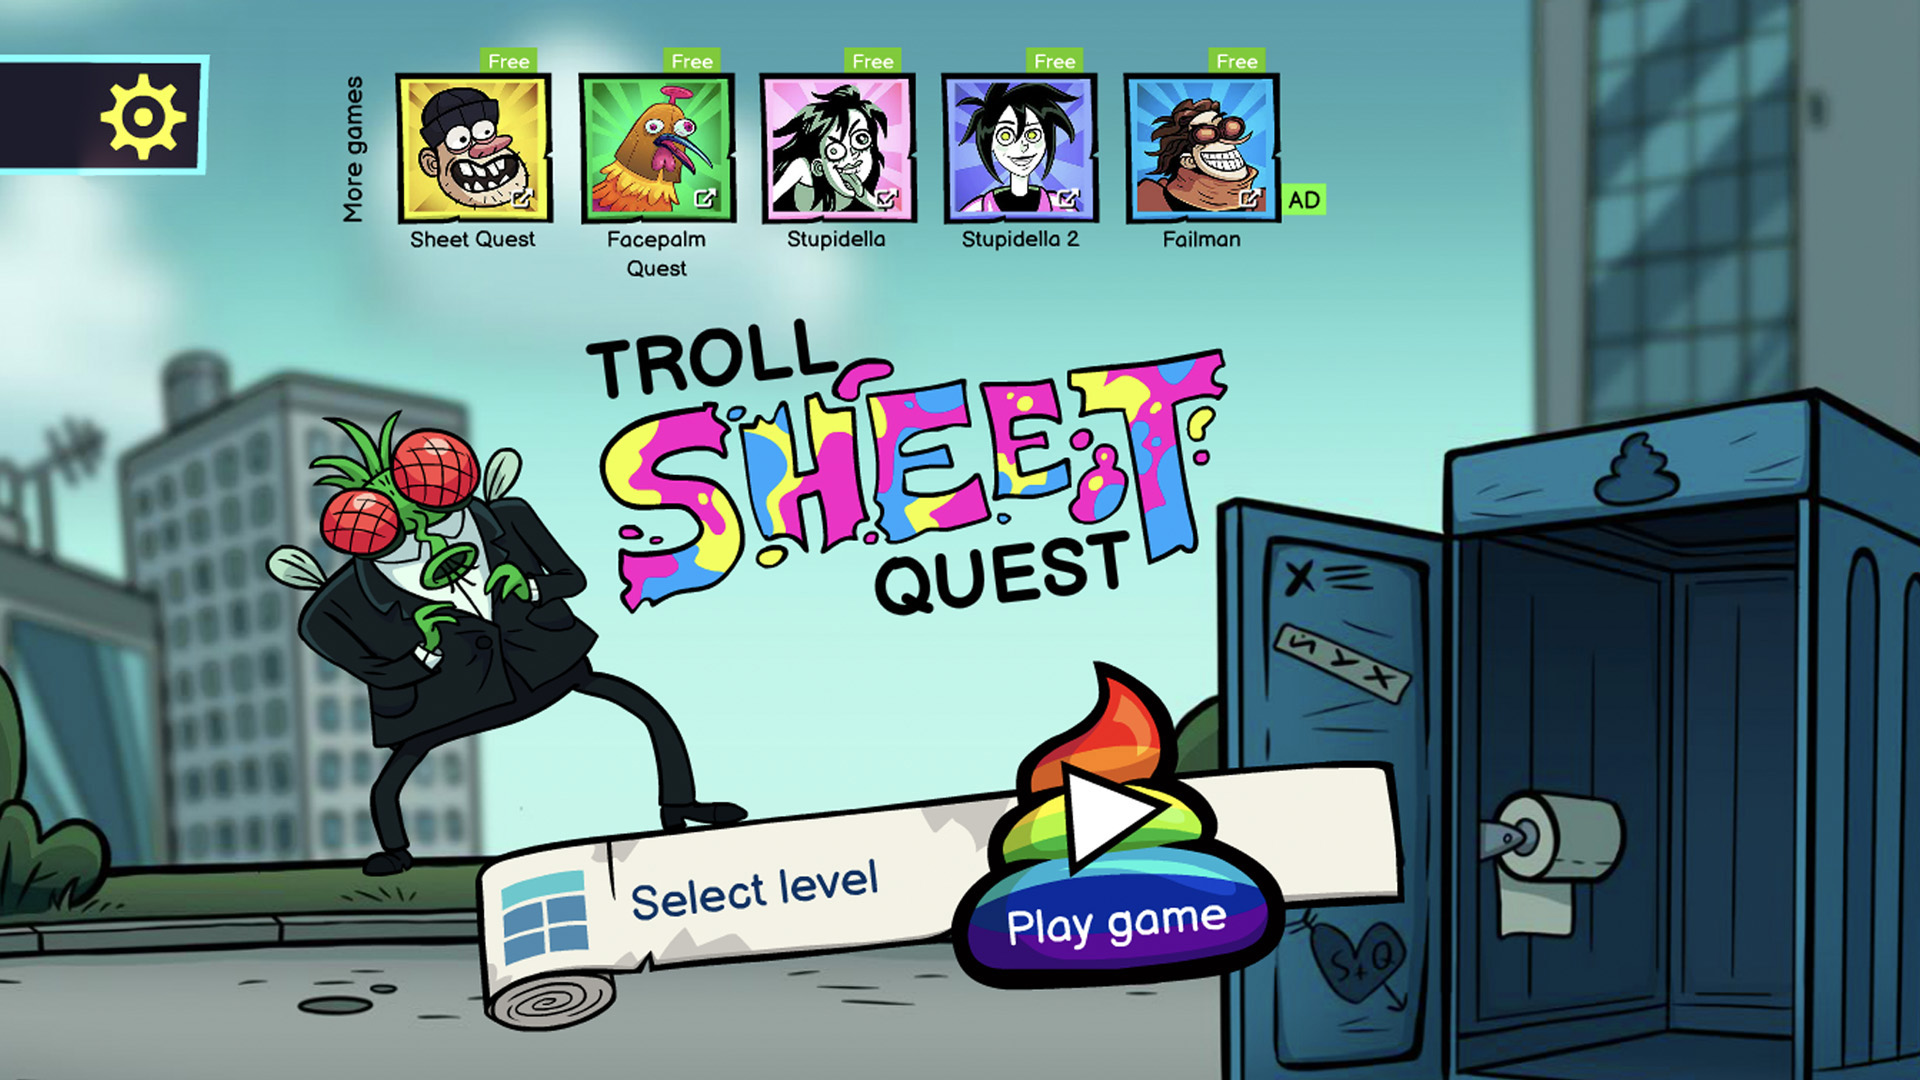 Troll Sheet Quest